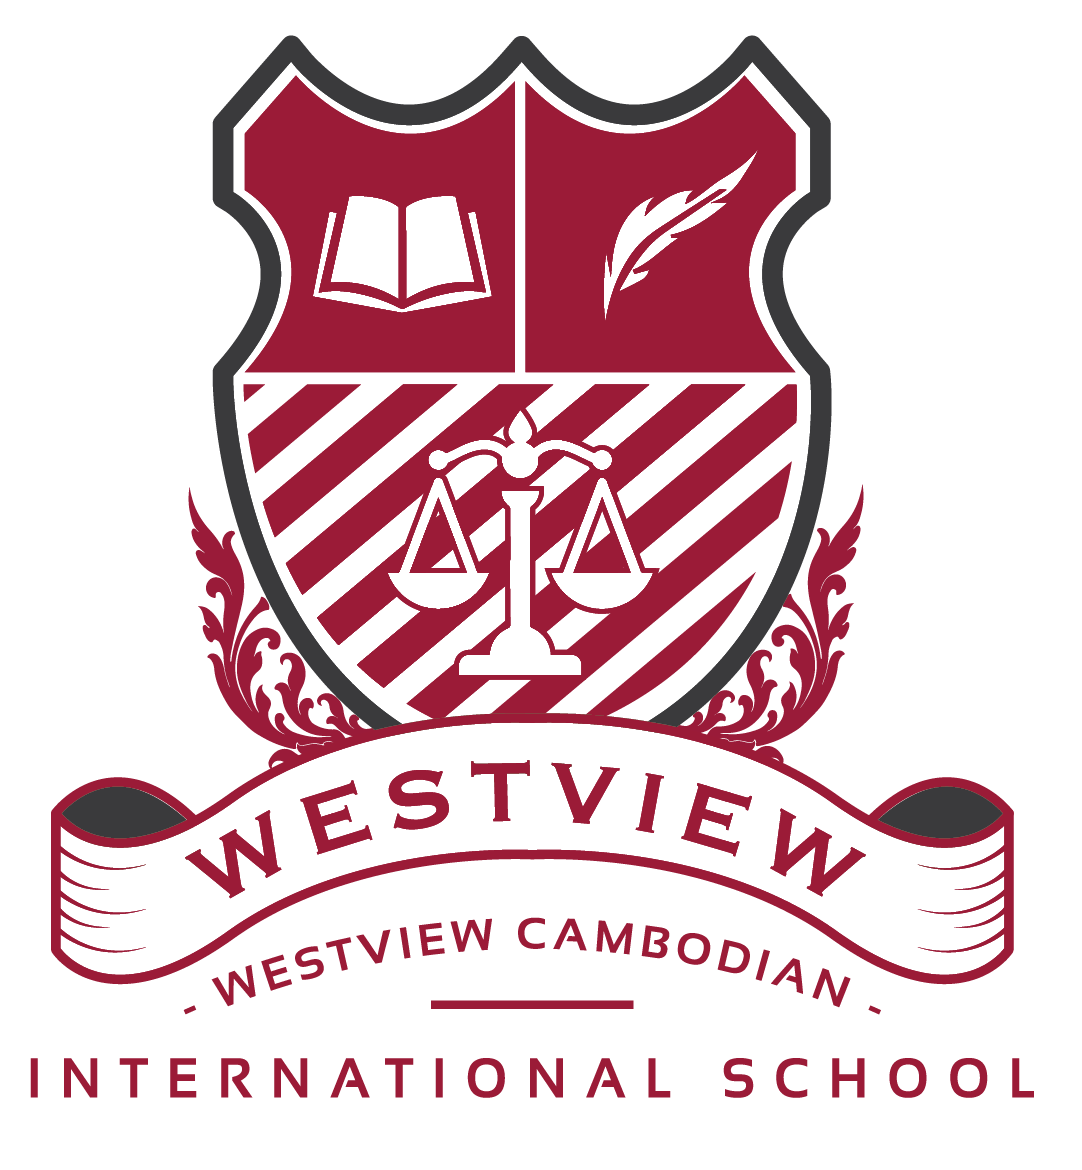 Westview Cambodian International School